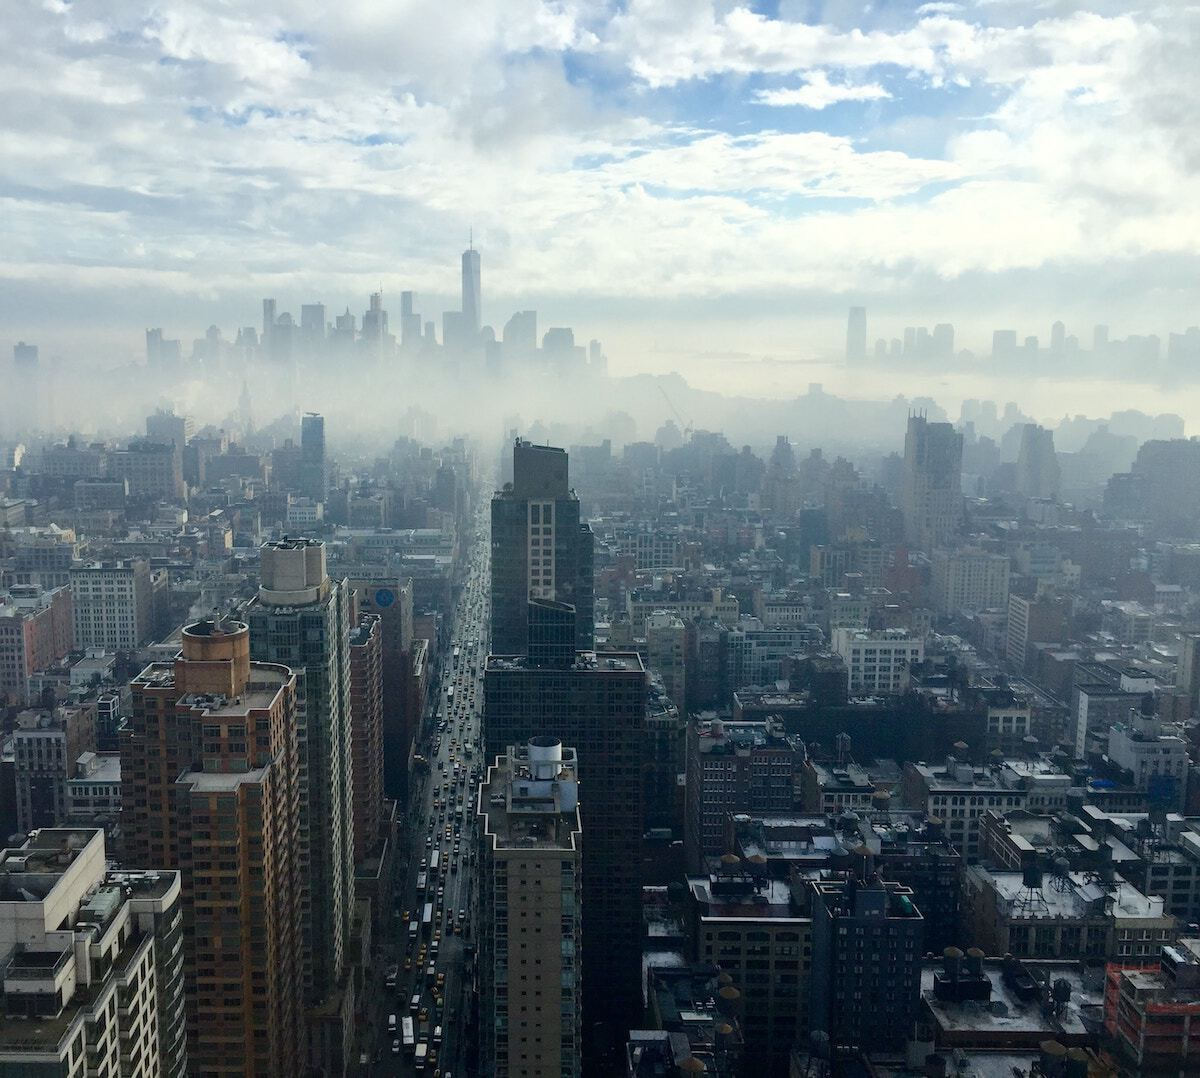 City scrapers bursting through clouds.